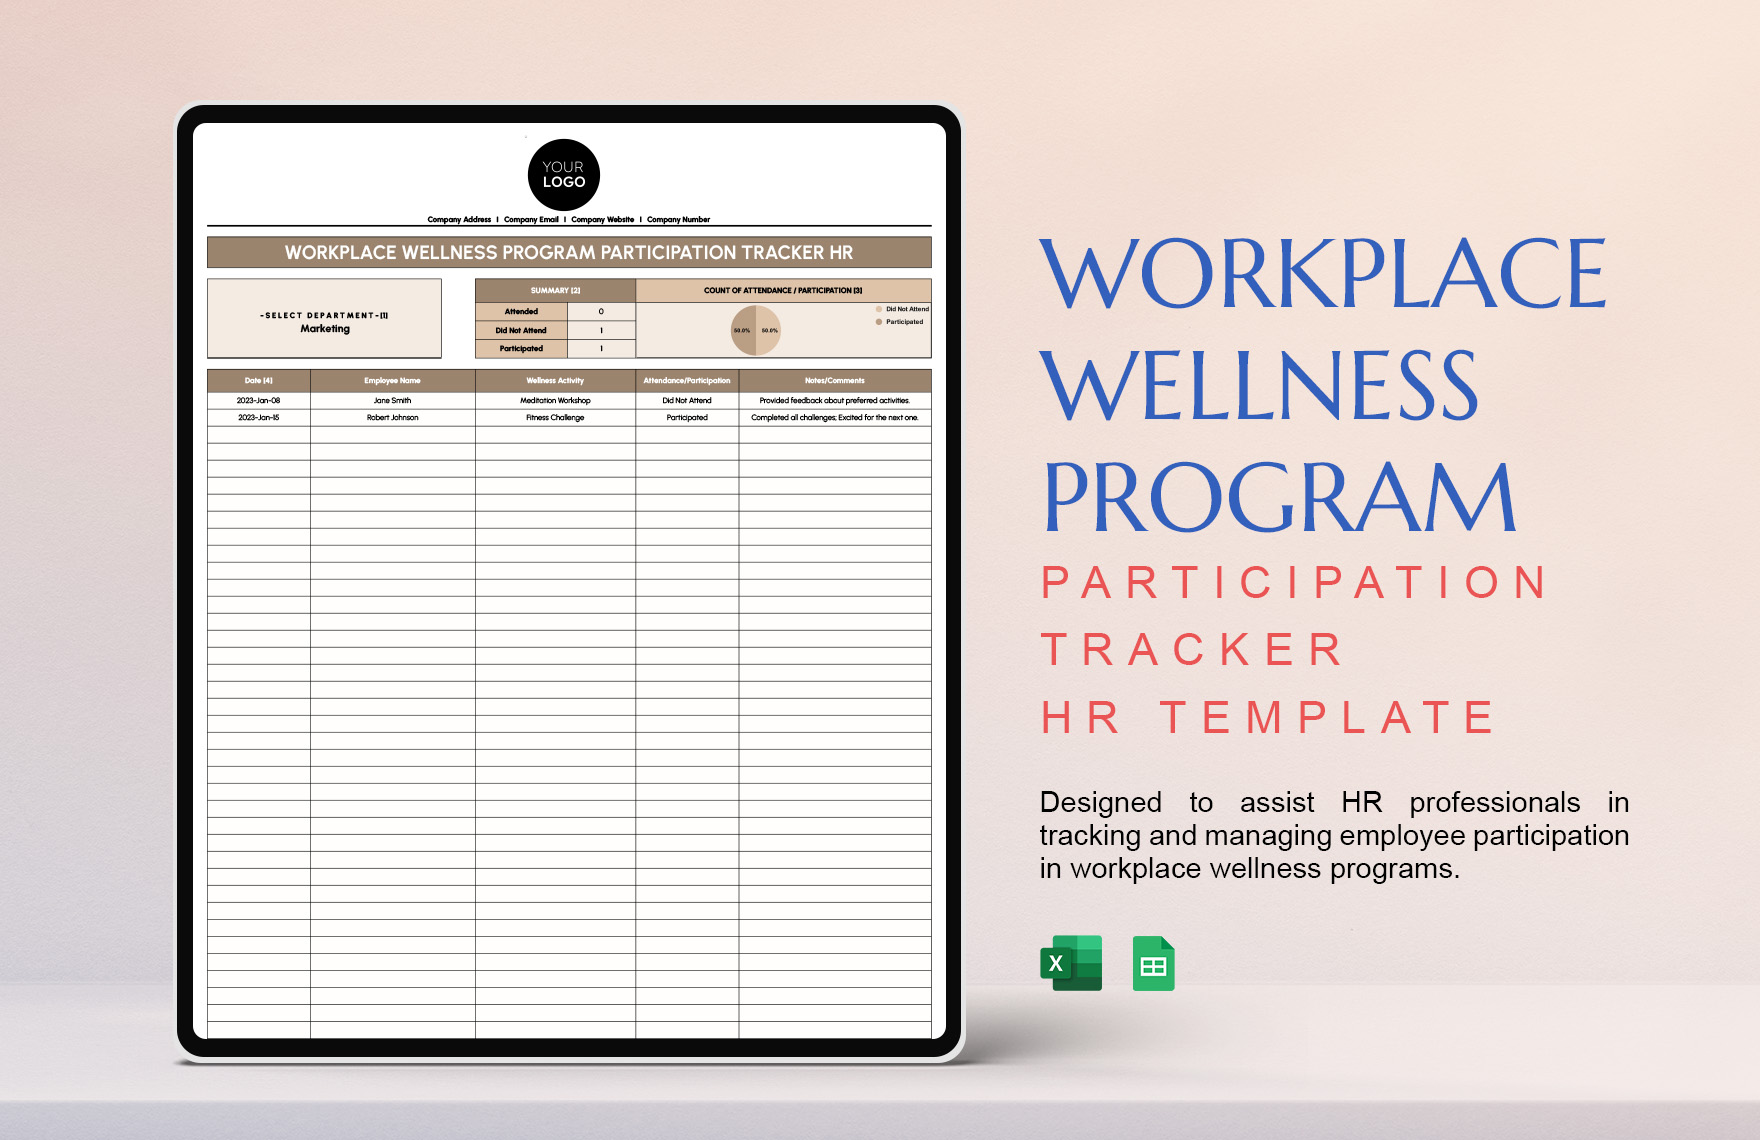 Workplace Wellness Program Participation Tracker HR Template